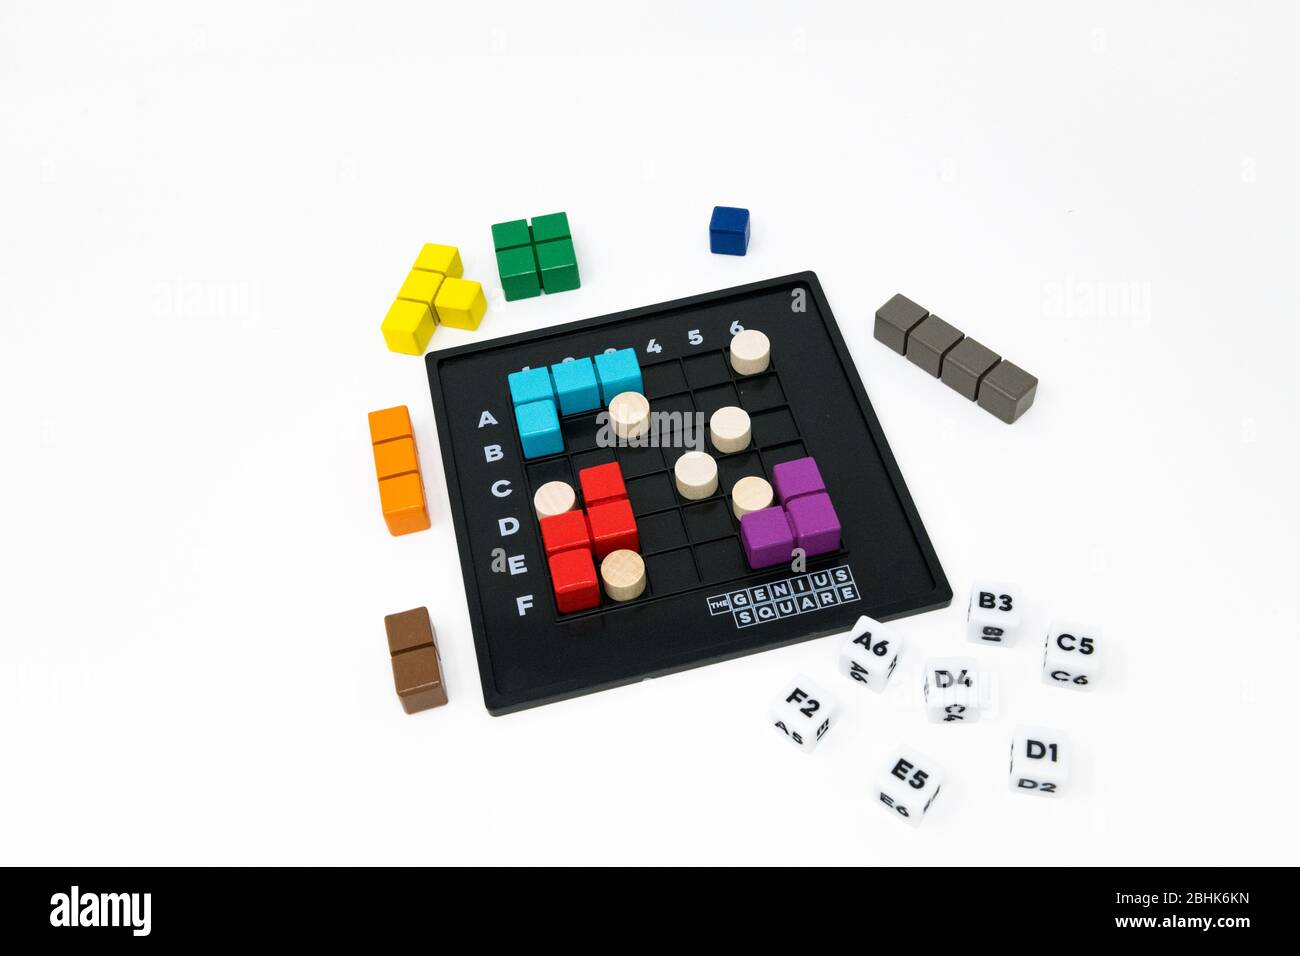 https://c8.alamy.com/comp/2BHK6KN/the-puzzle-game-genius-square-2BHK6KN.jpg